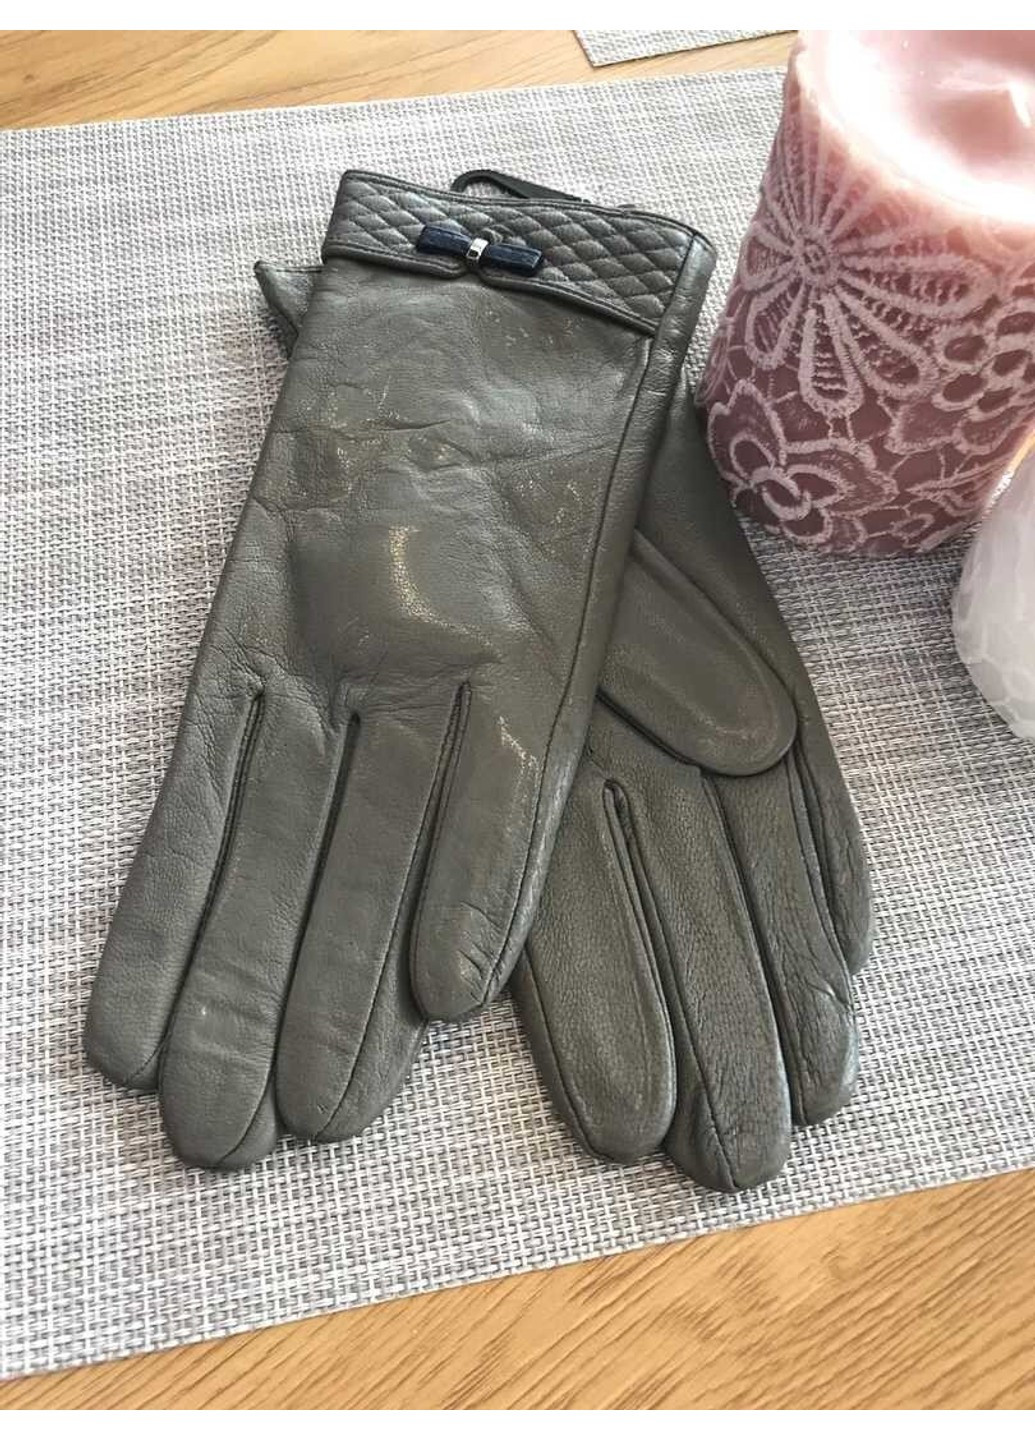 Жіночі шкіряні рукавички сірі 375s2 M Shust Gloves (261486920)